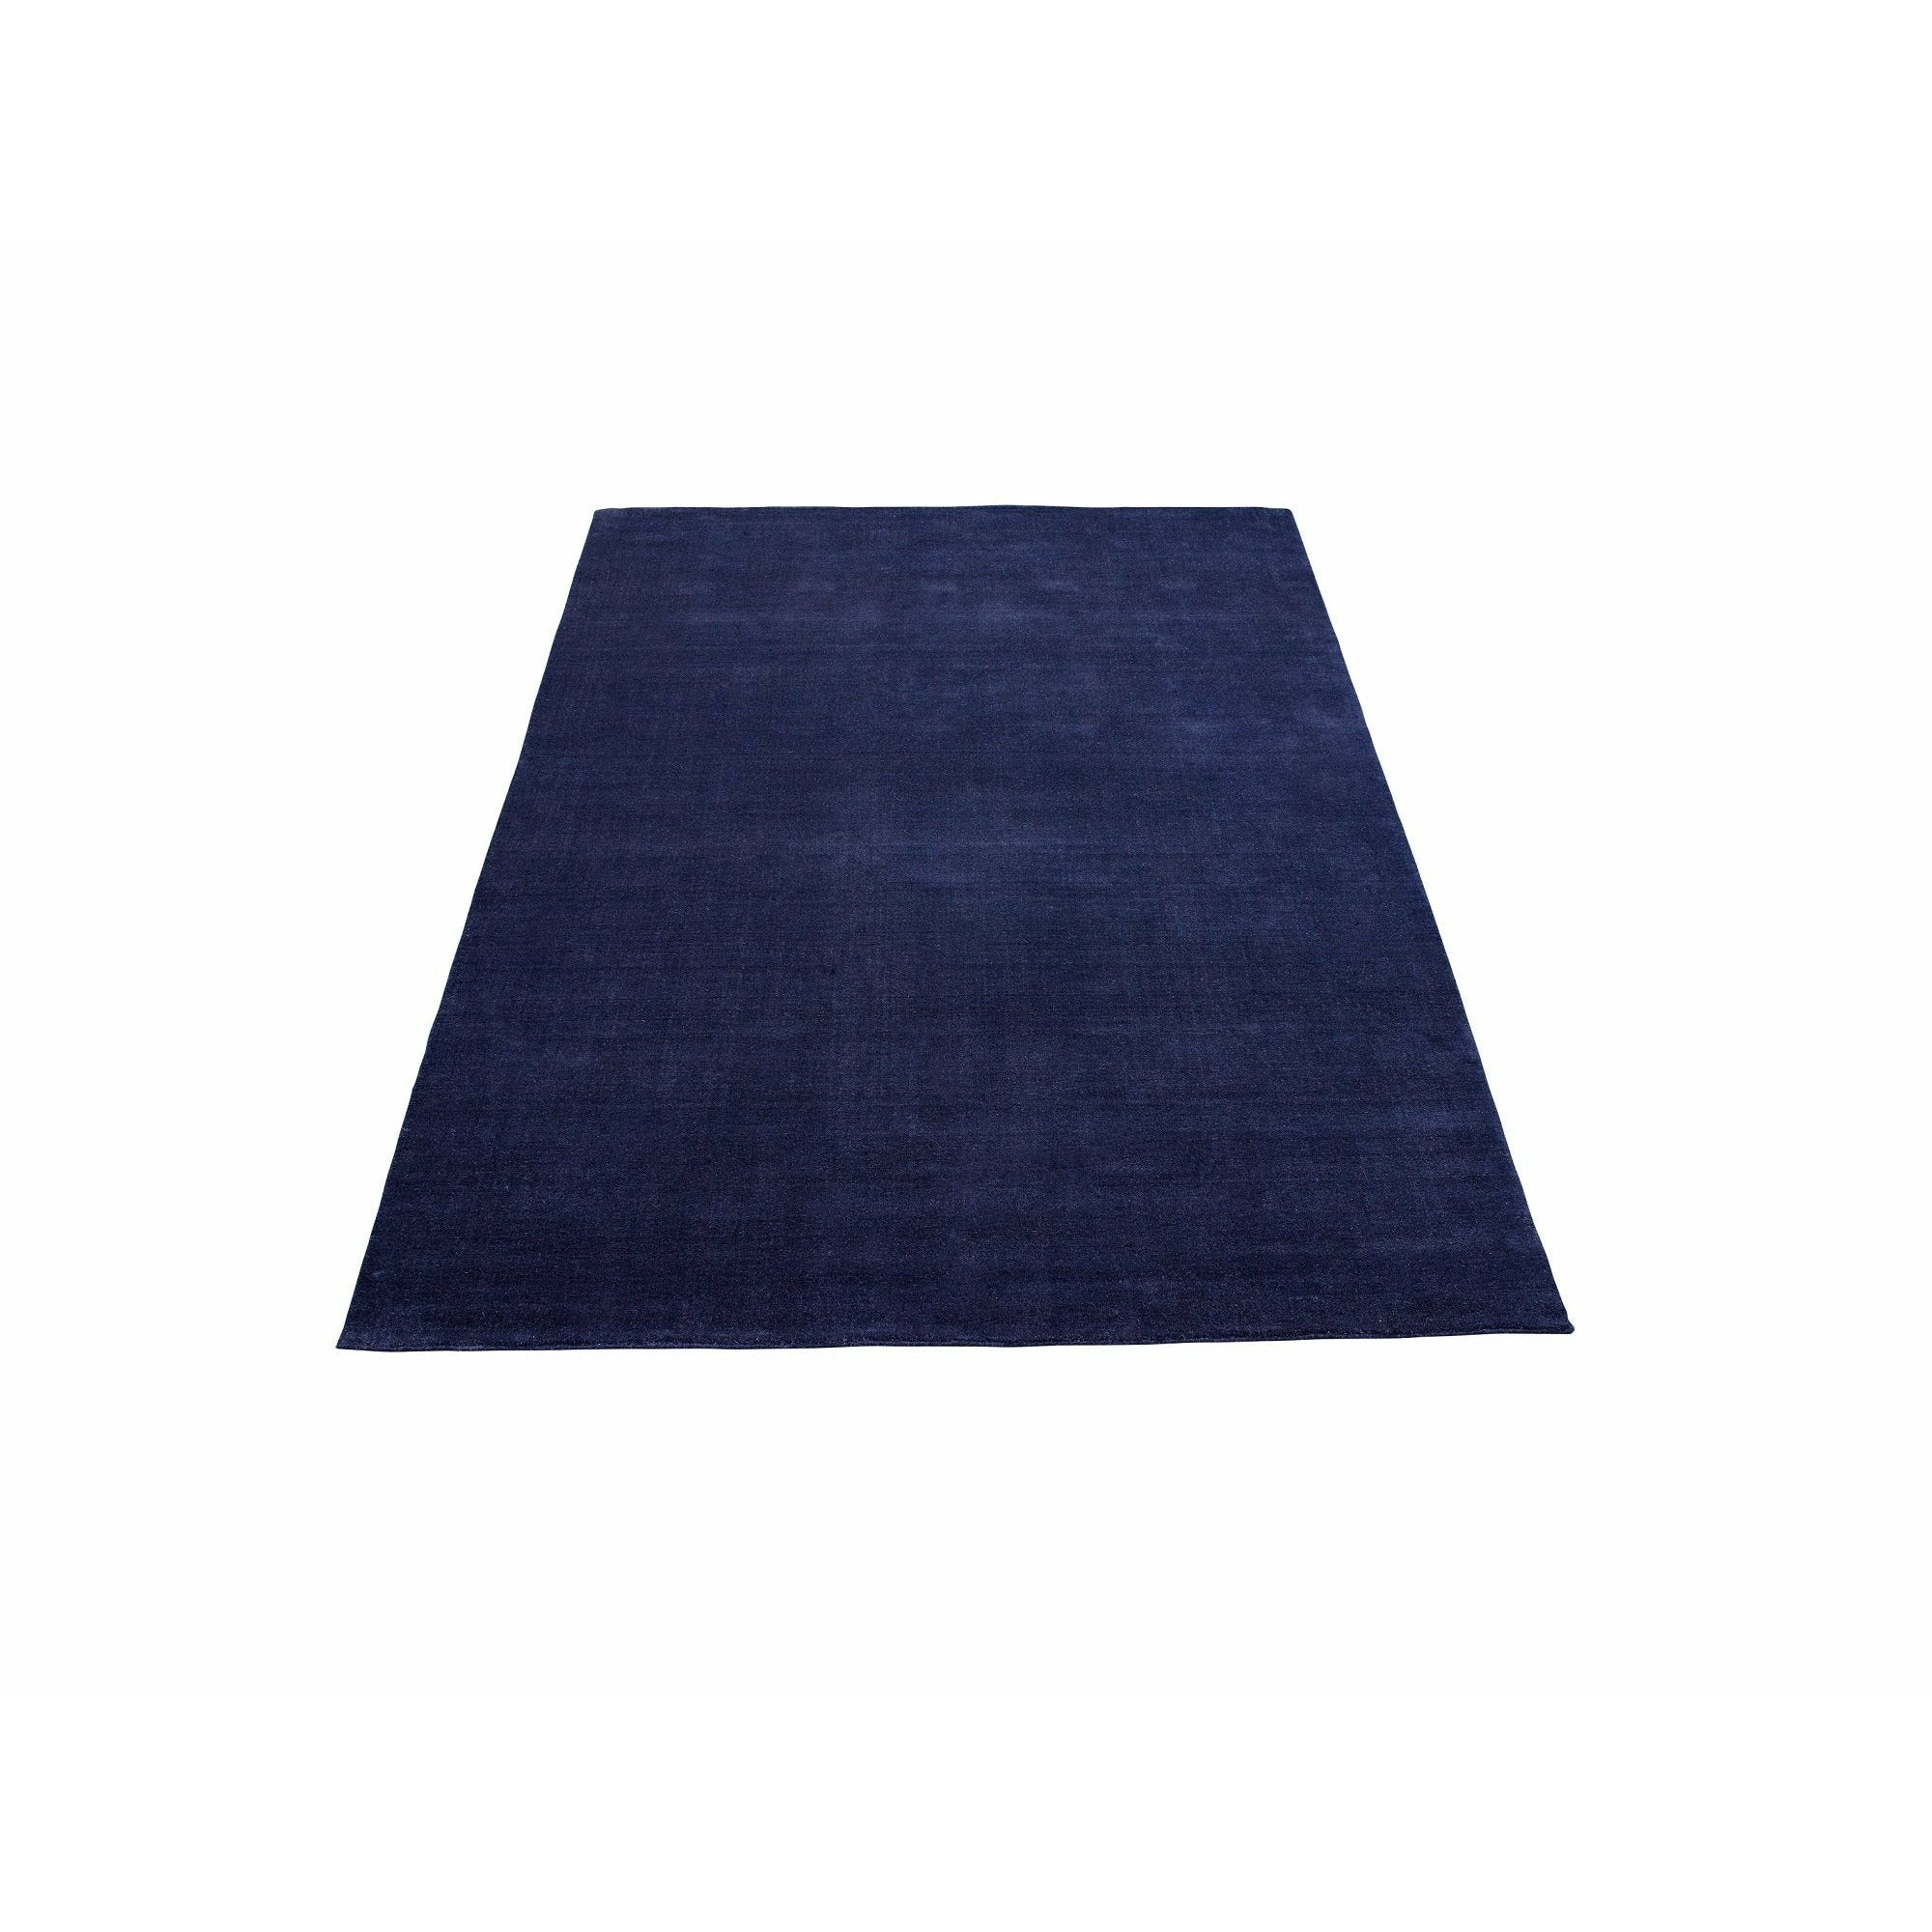 Massimo Earth Bamboo alfombra vibrante azul, 200x300 cm